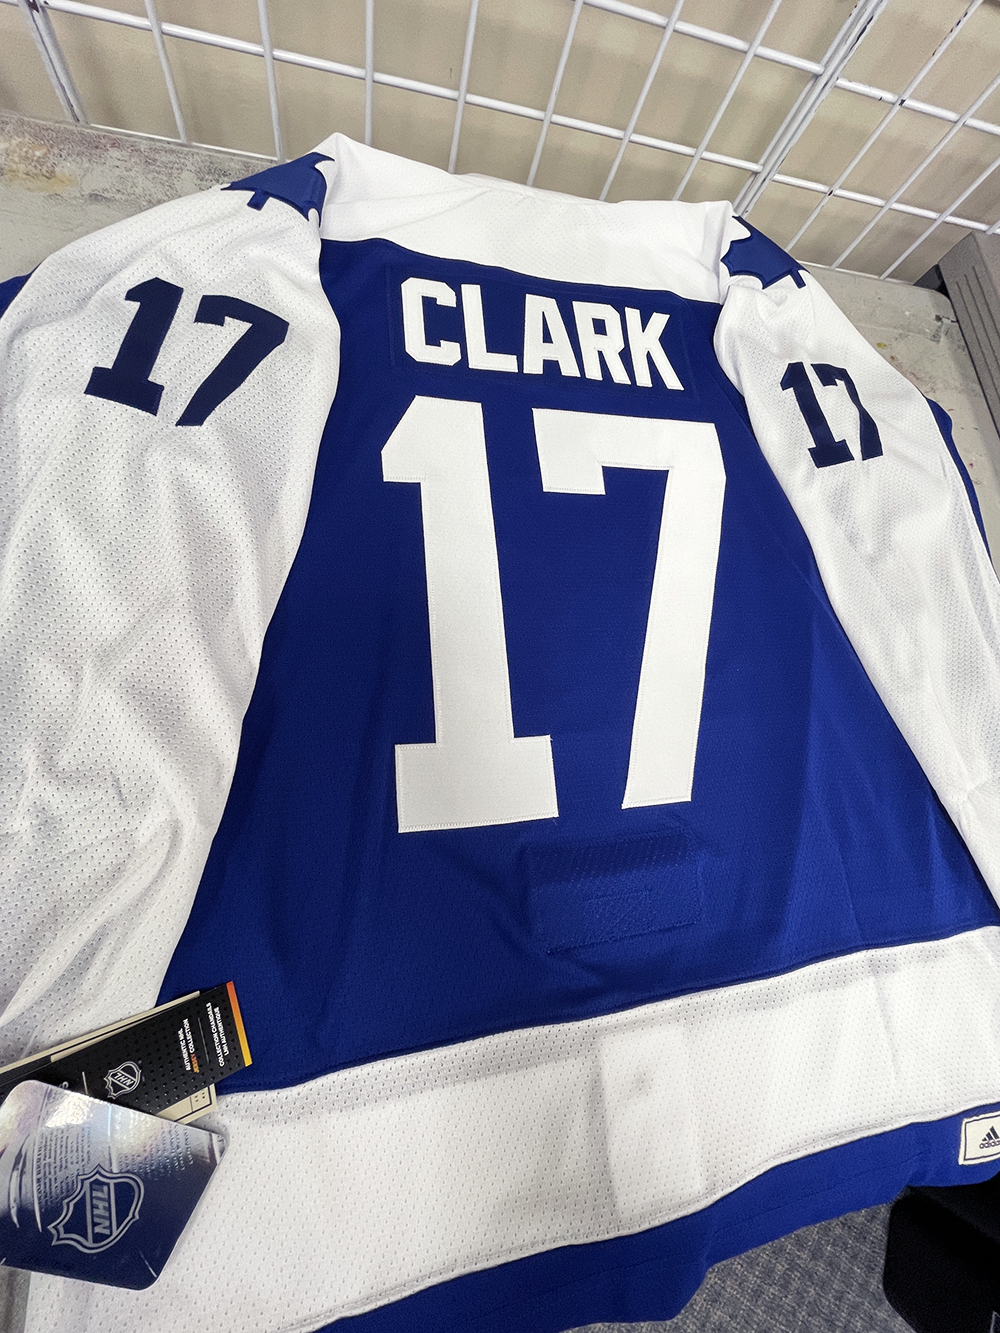 Toronto Maple Leafs  Stephen Clark ()